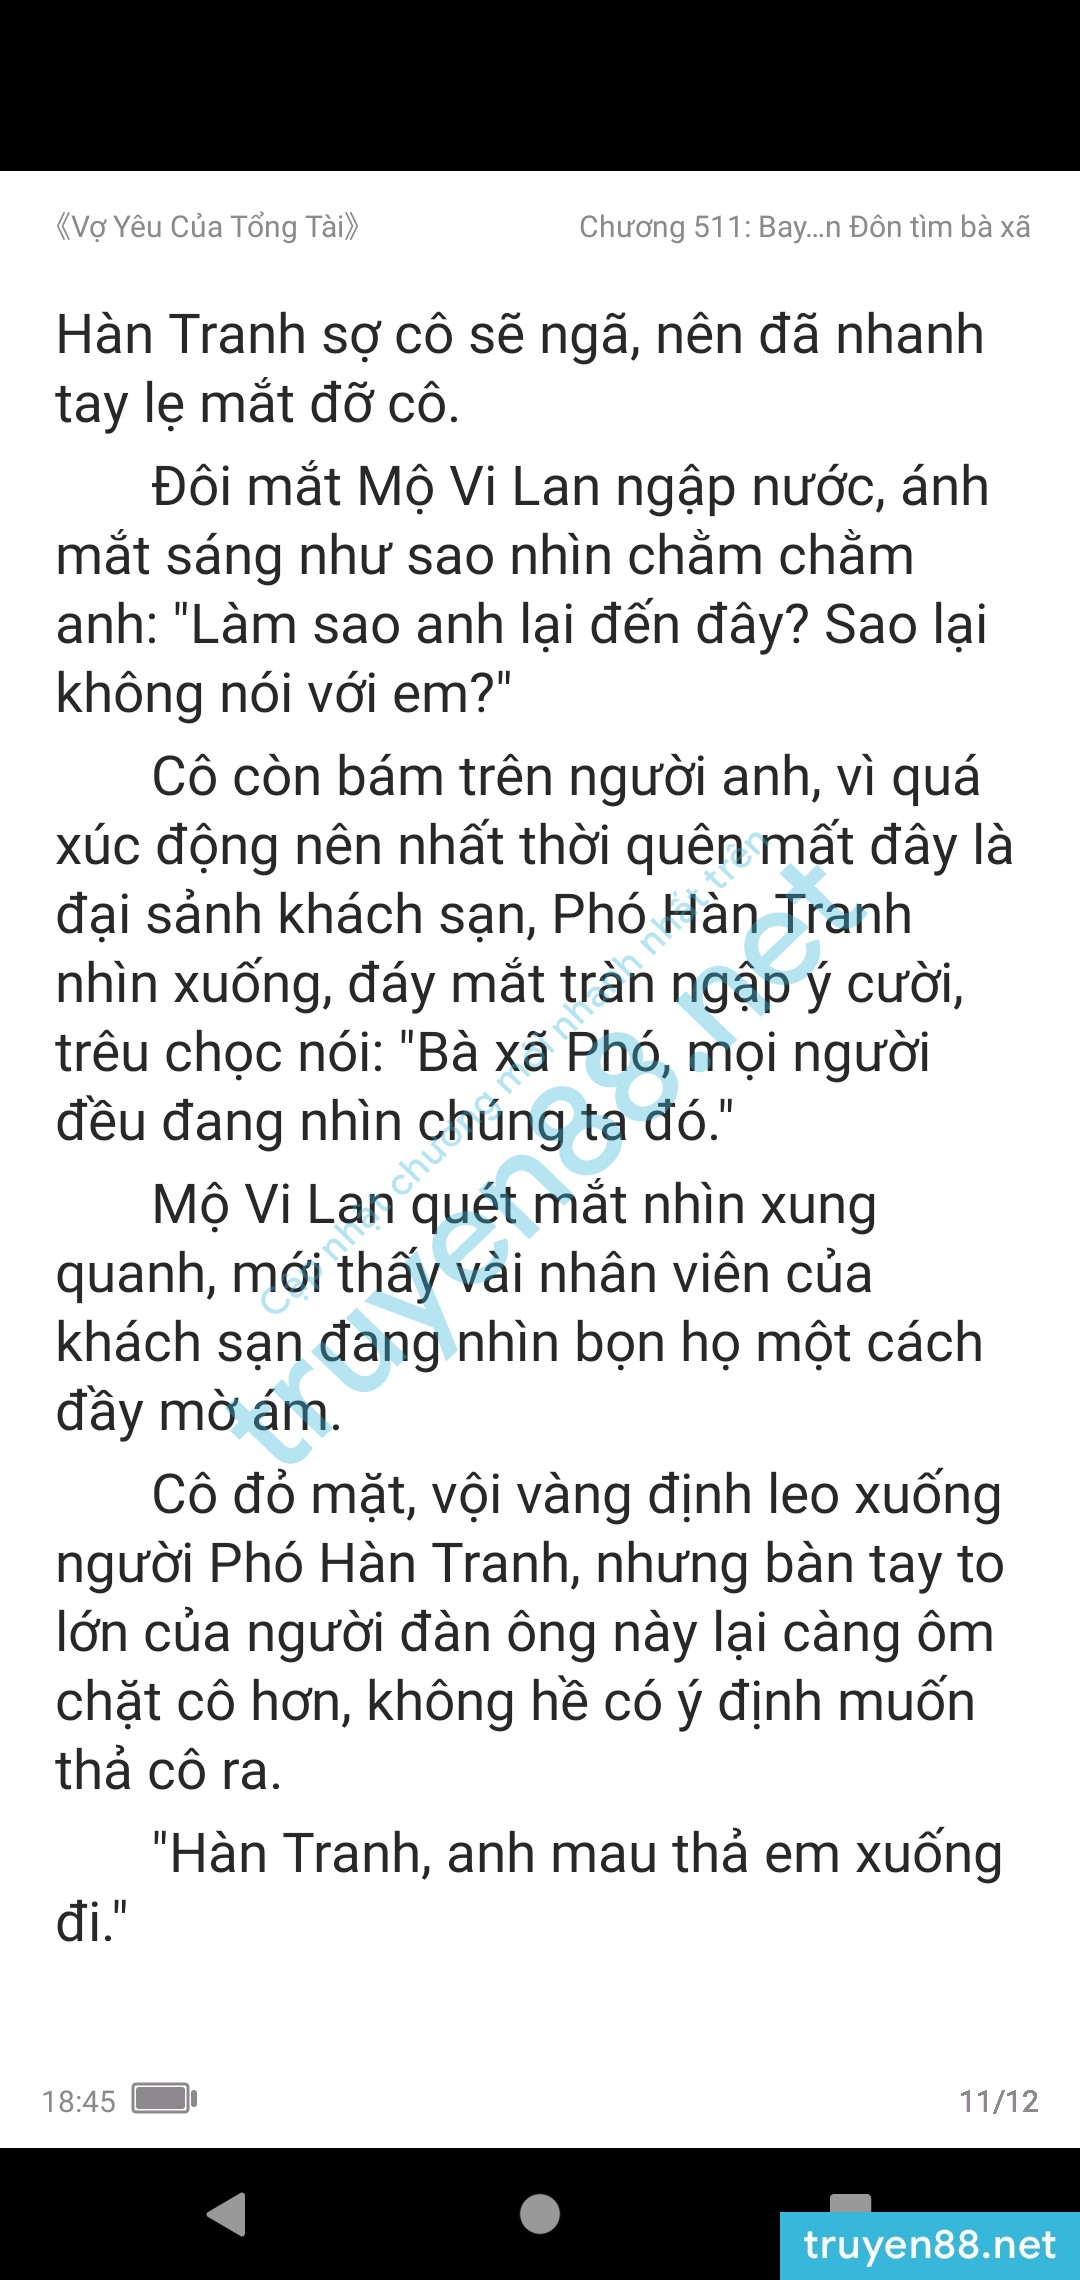 vo-yeu-cua-tong-tai-mo-vi-lan--pho-han-tranh-521-0